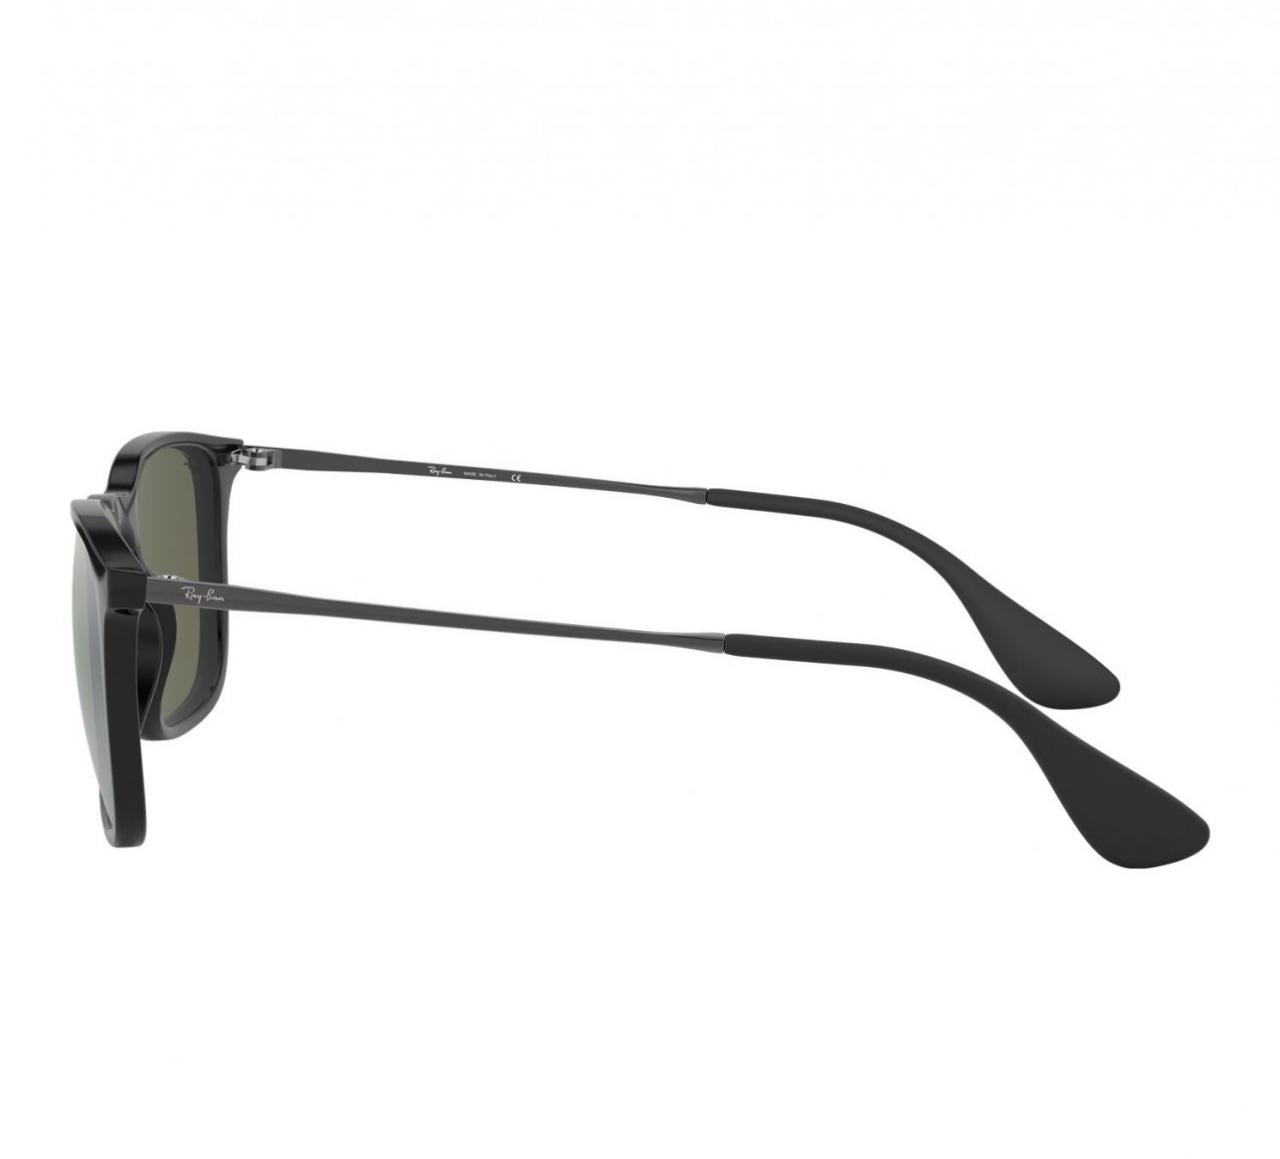 Ray-Ban RB4187F-601/30 Unisex Chris Gloss Black Square Silver Lens Nylon Sunglasses